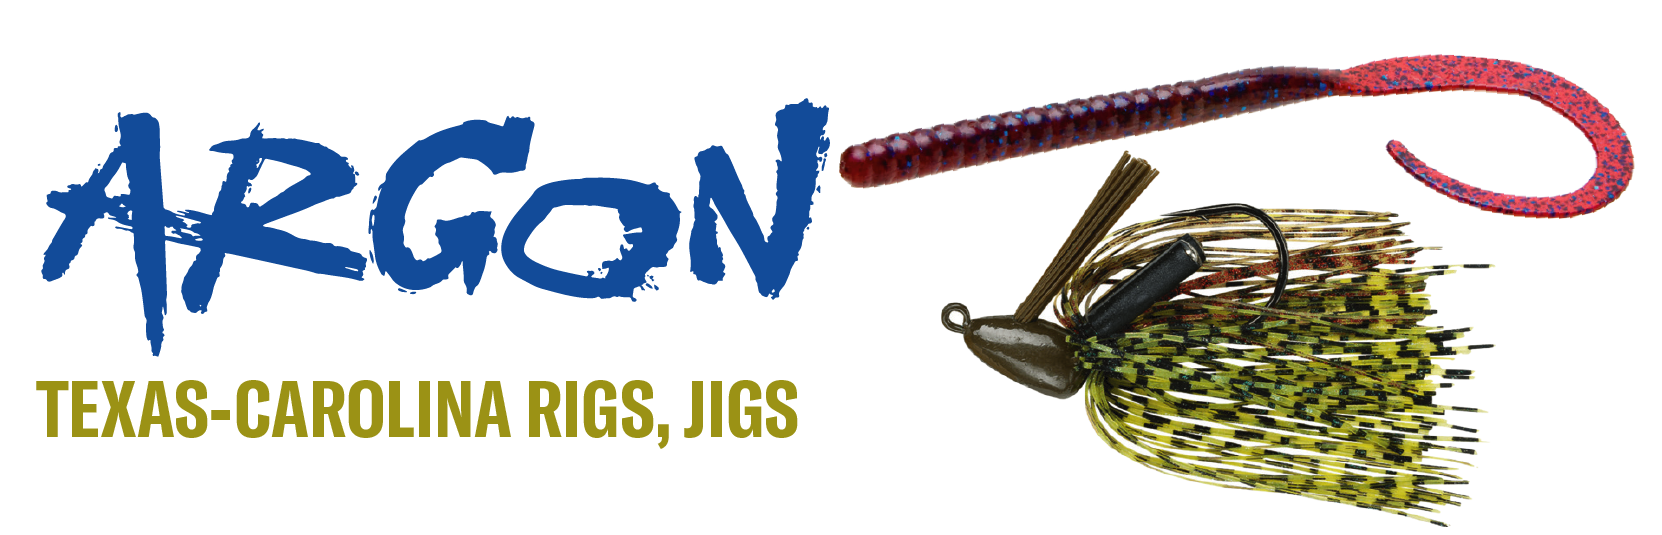 Argon Texas Carolina Rigs, Jigs Casting Rods